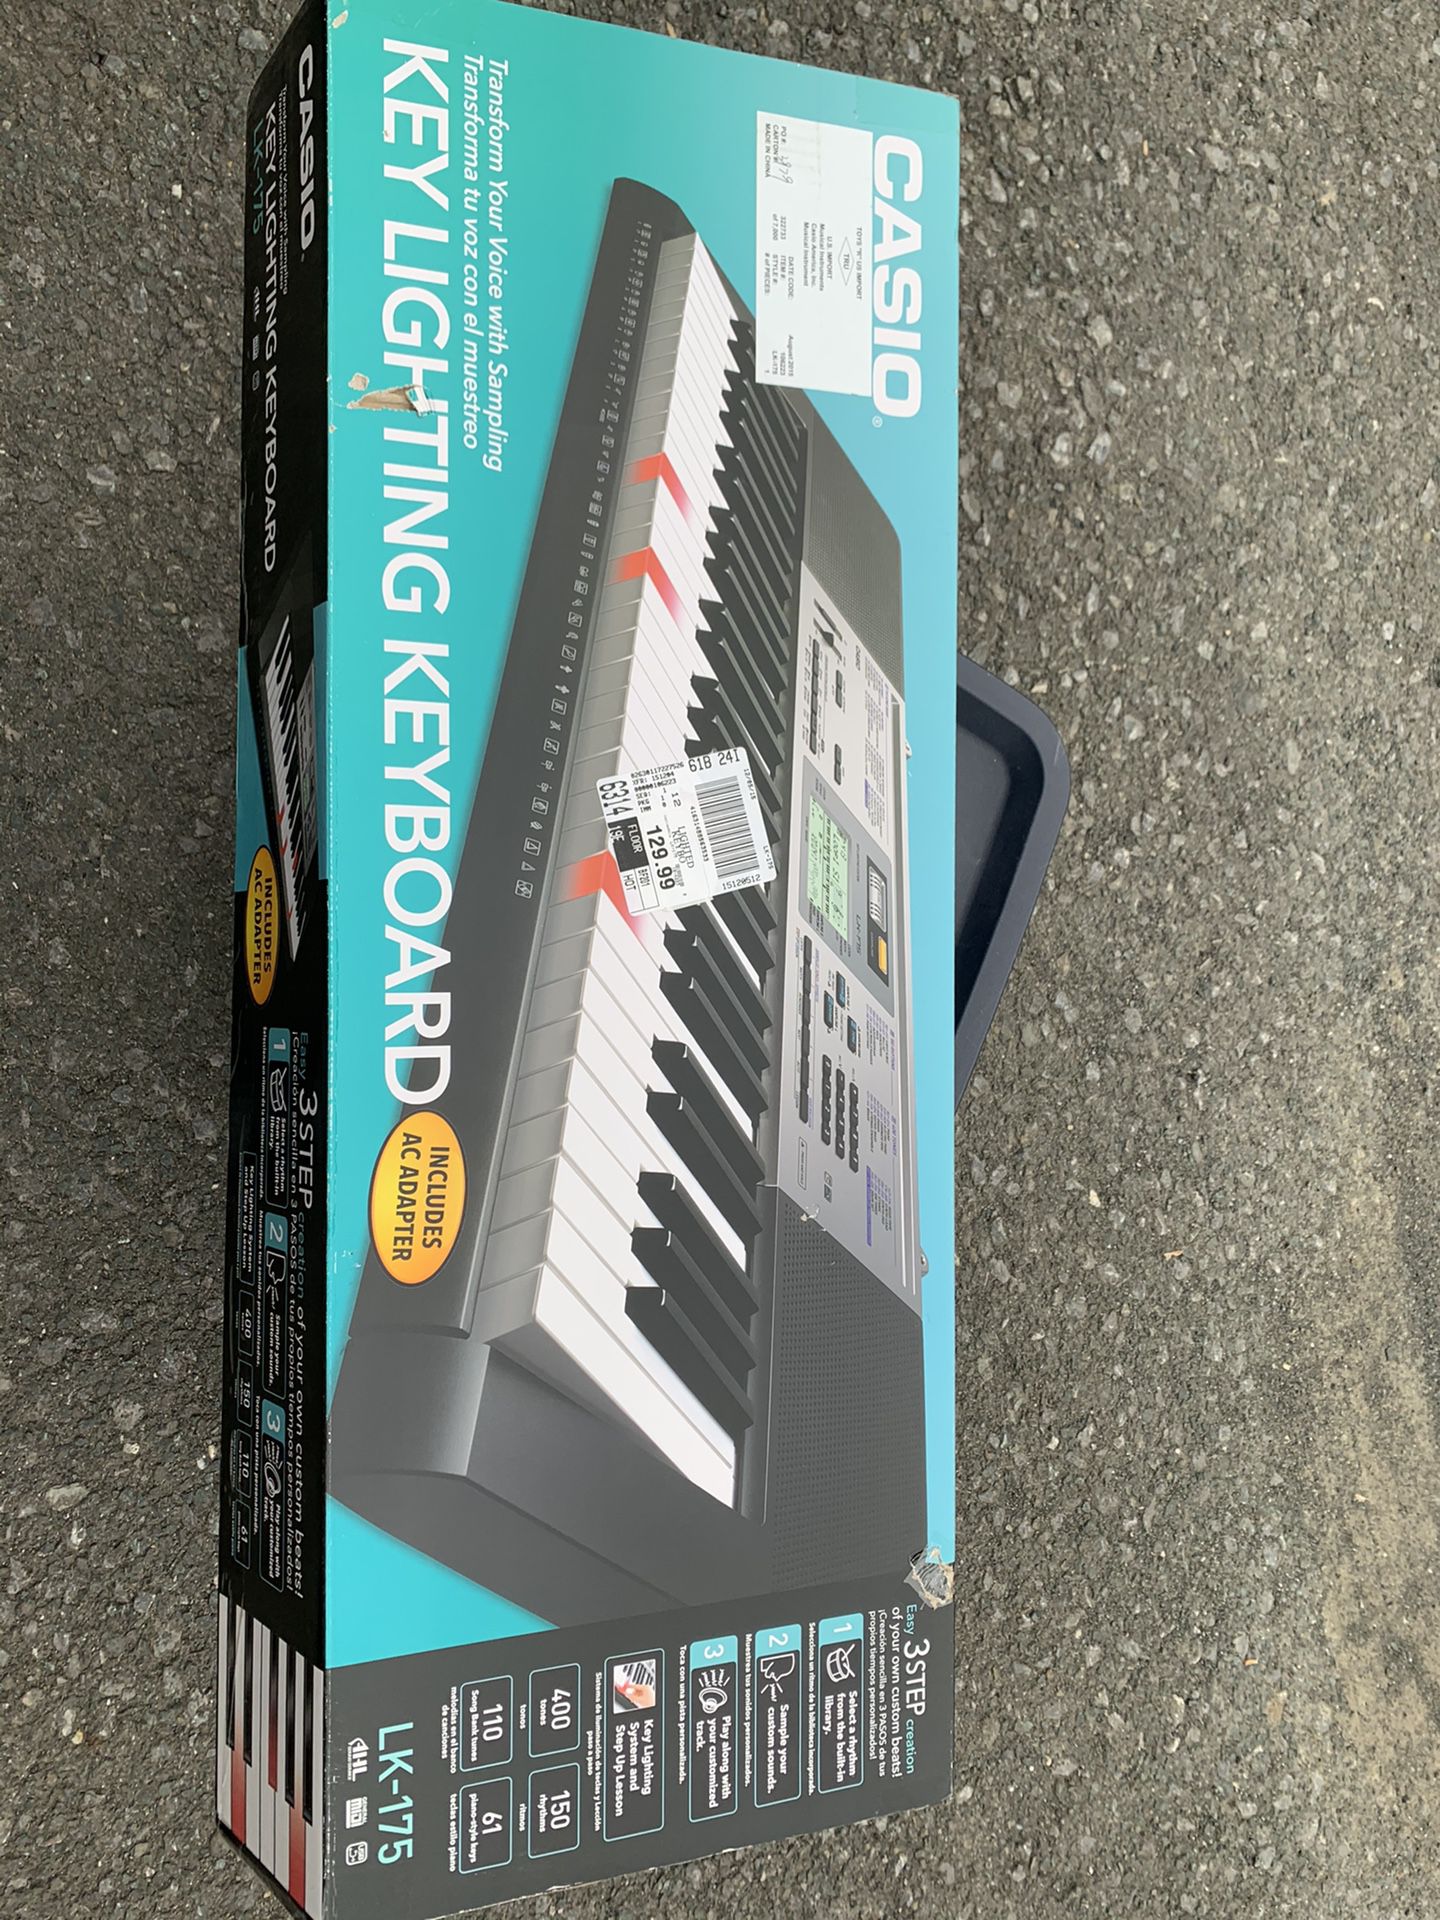 Casio LK-175 keyboard